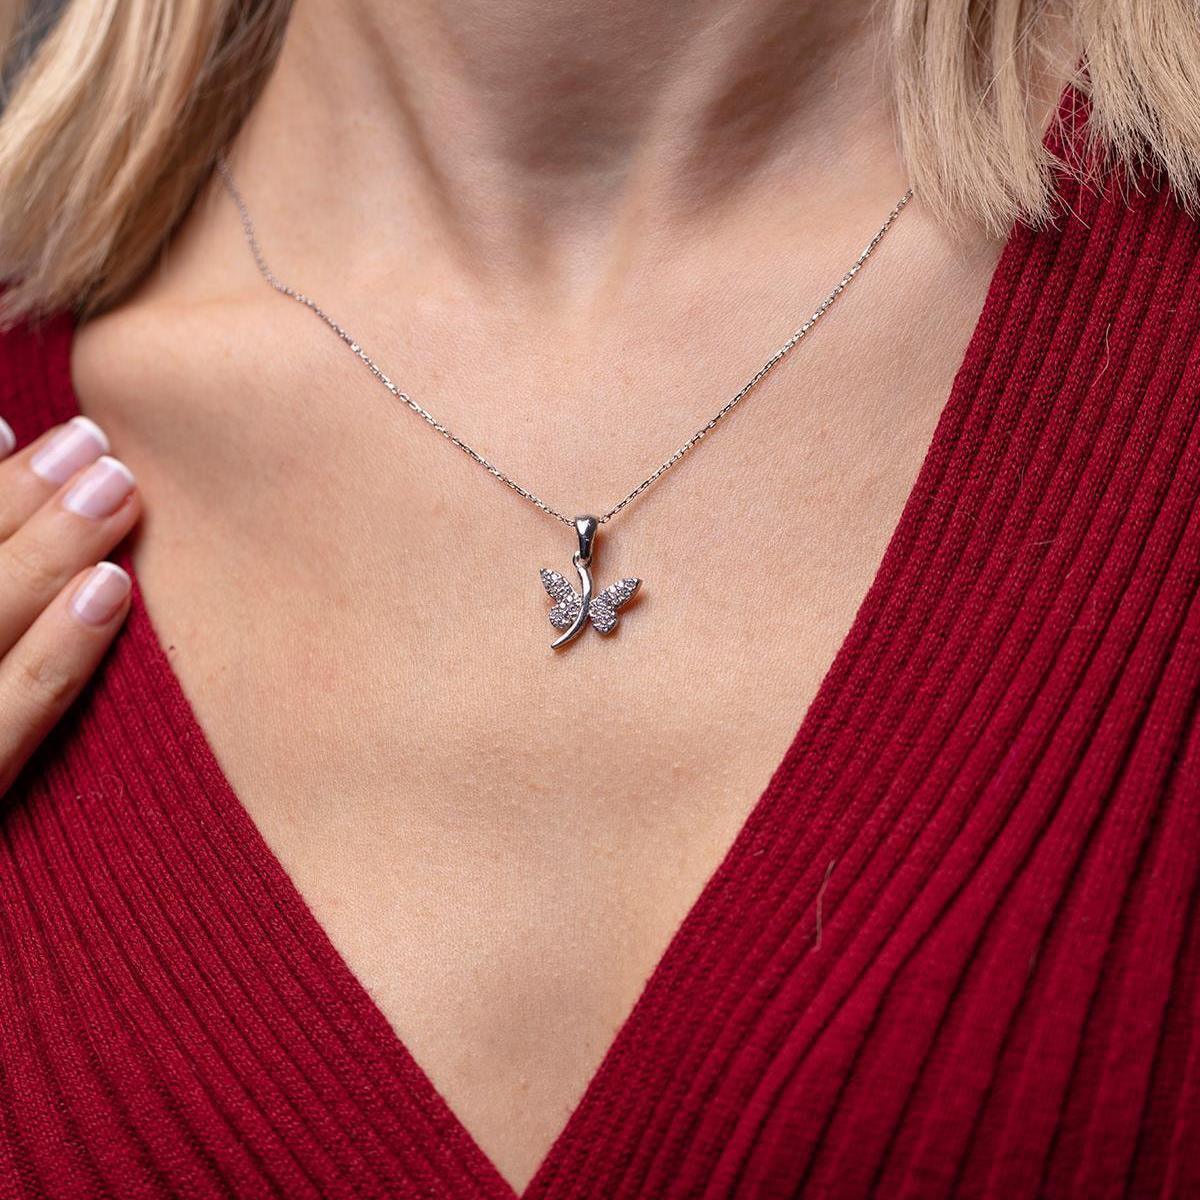 Butterfly Diamond Necklace • Butterfly Cz Diamond Necklace - Trending Silver Gifts